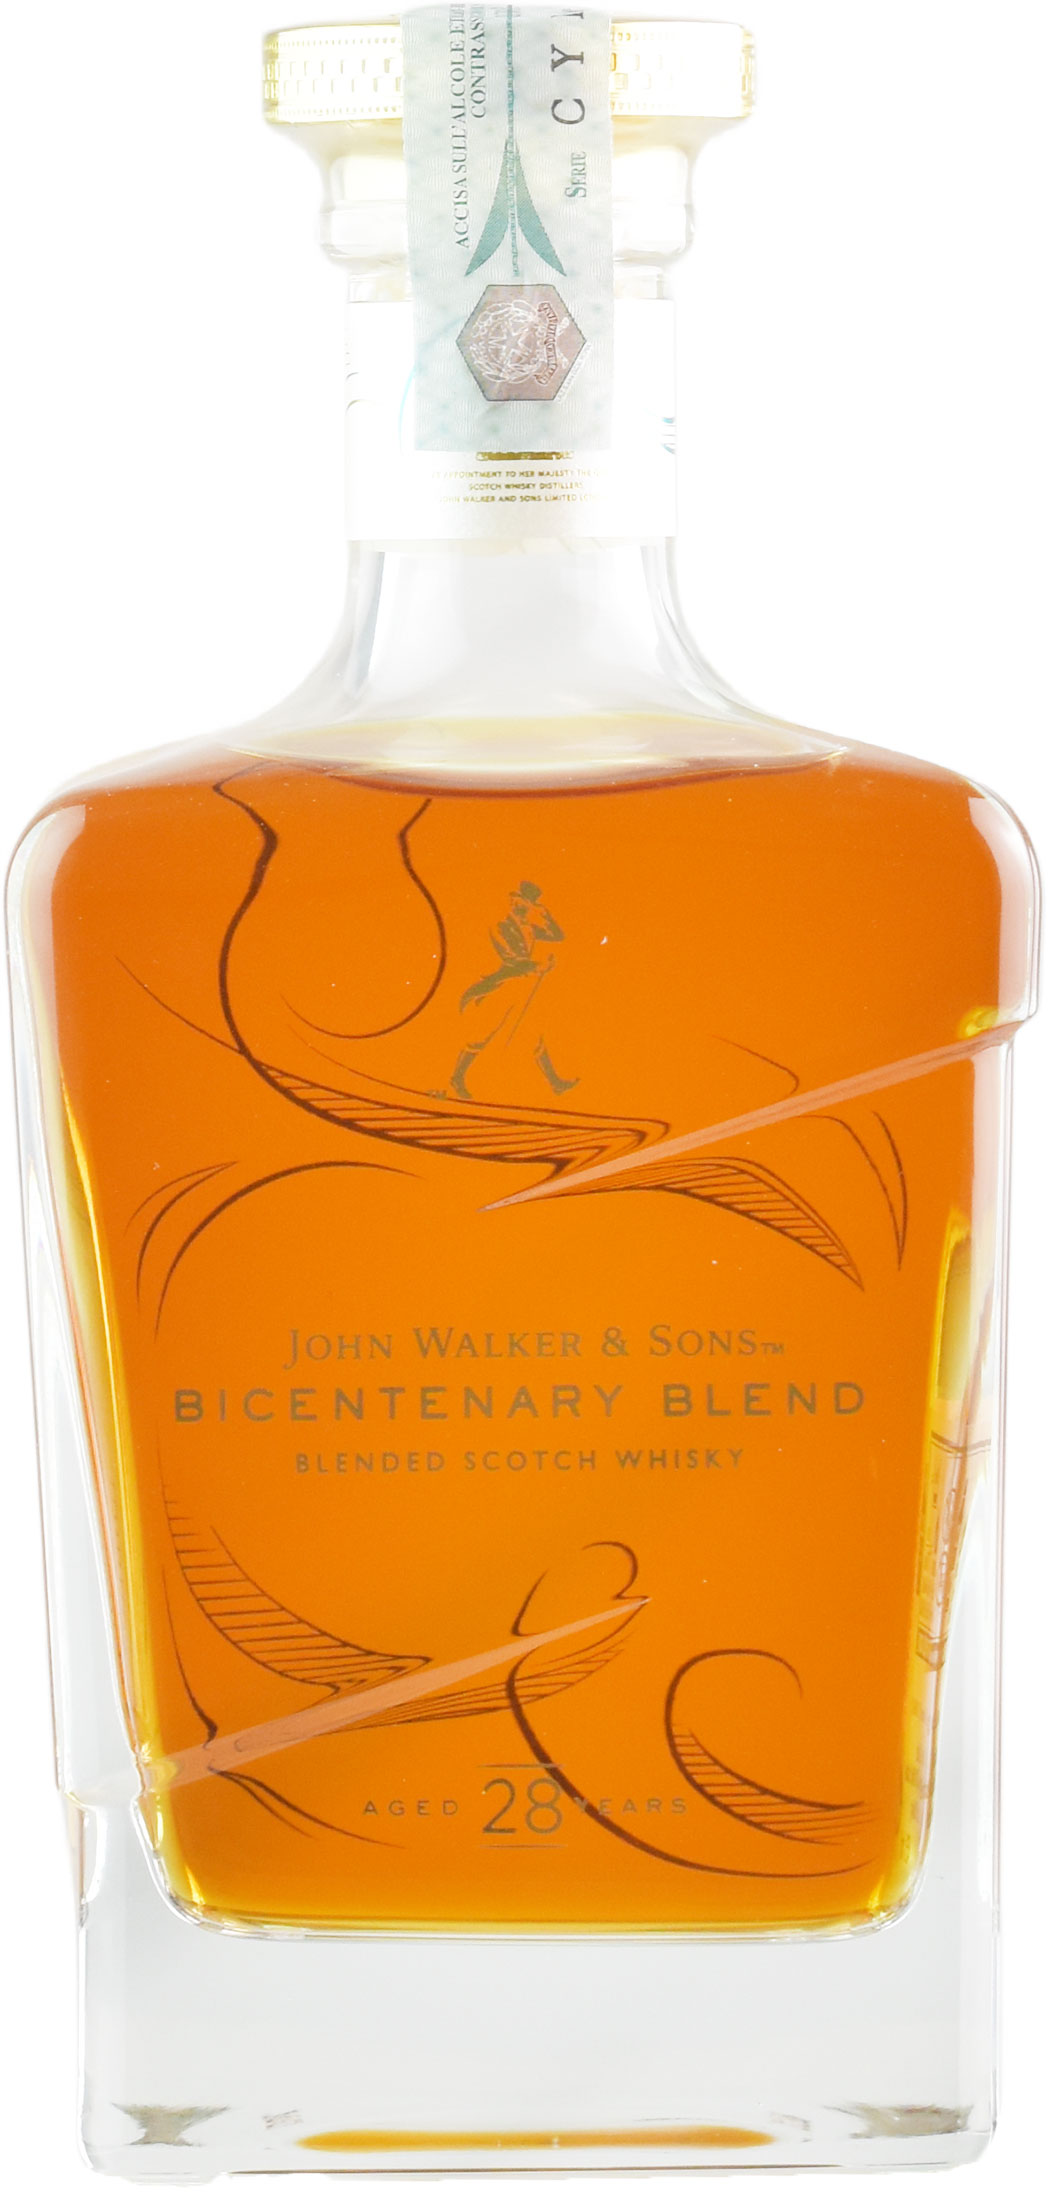 Johnnie Walker & Sons Blended Scotch Whisky Bicentenary Blend 28 Anni